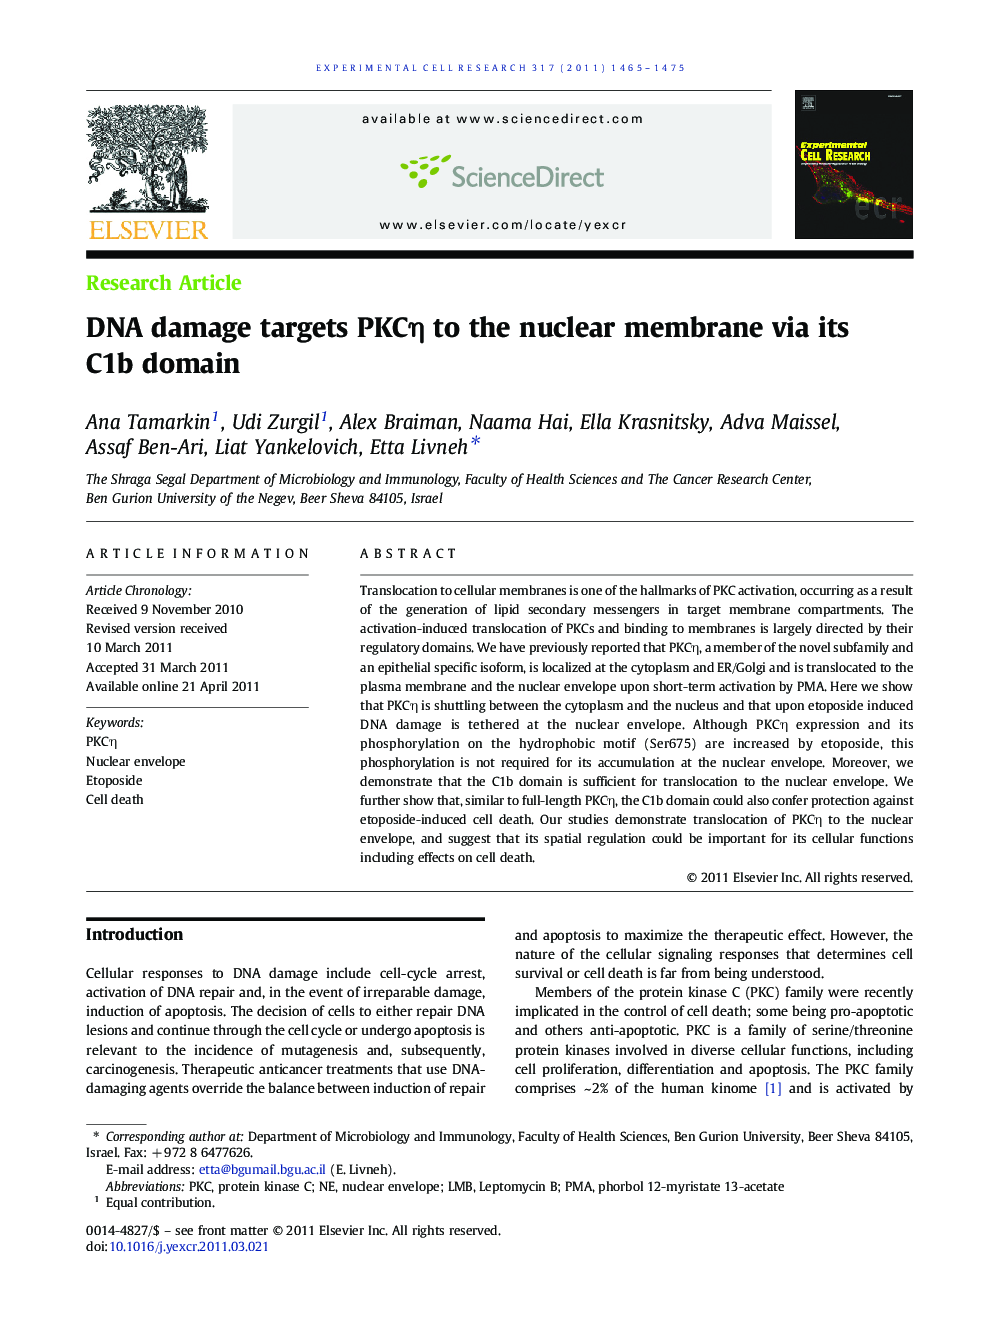 DNA damage targets PKCη to the nuclear membrane via its C1b domain